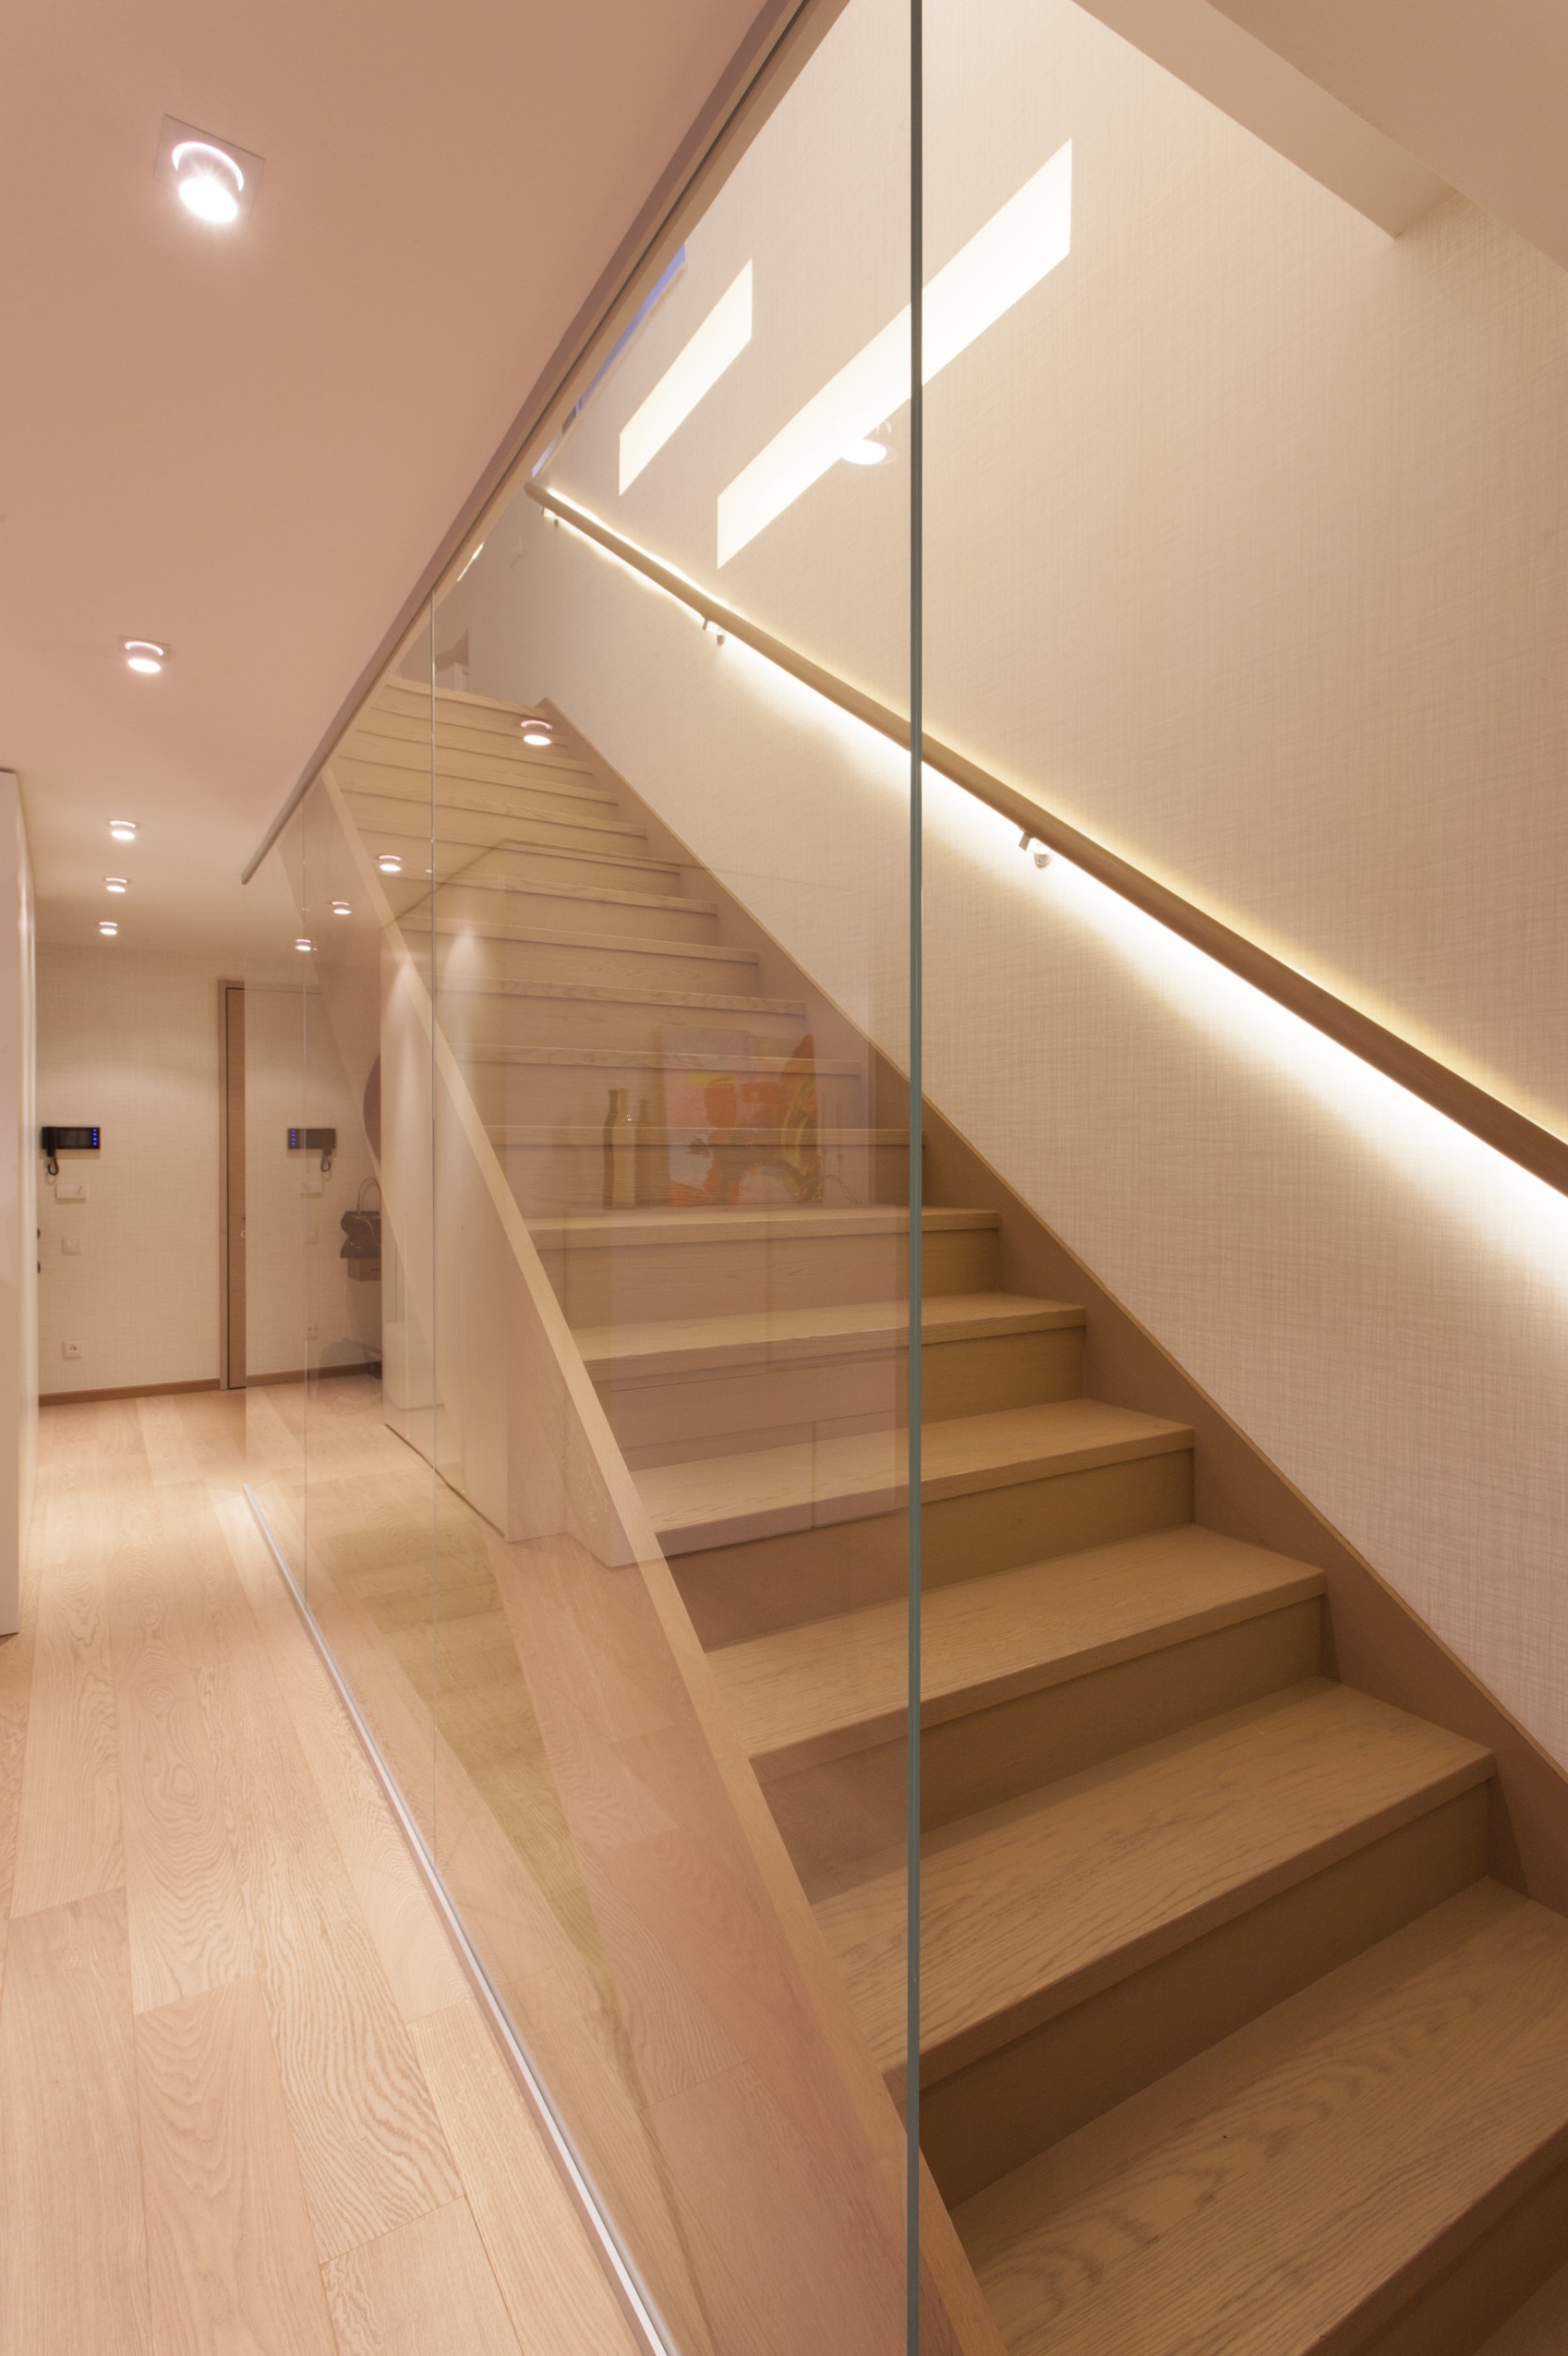 https://nbc-arhitect.ro/wp-content/uploads/2020/10/NBC-Arhitect-_-Petofi-Sandor-_-Housing-_-interior-design_stairs_7.jpg